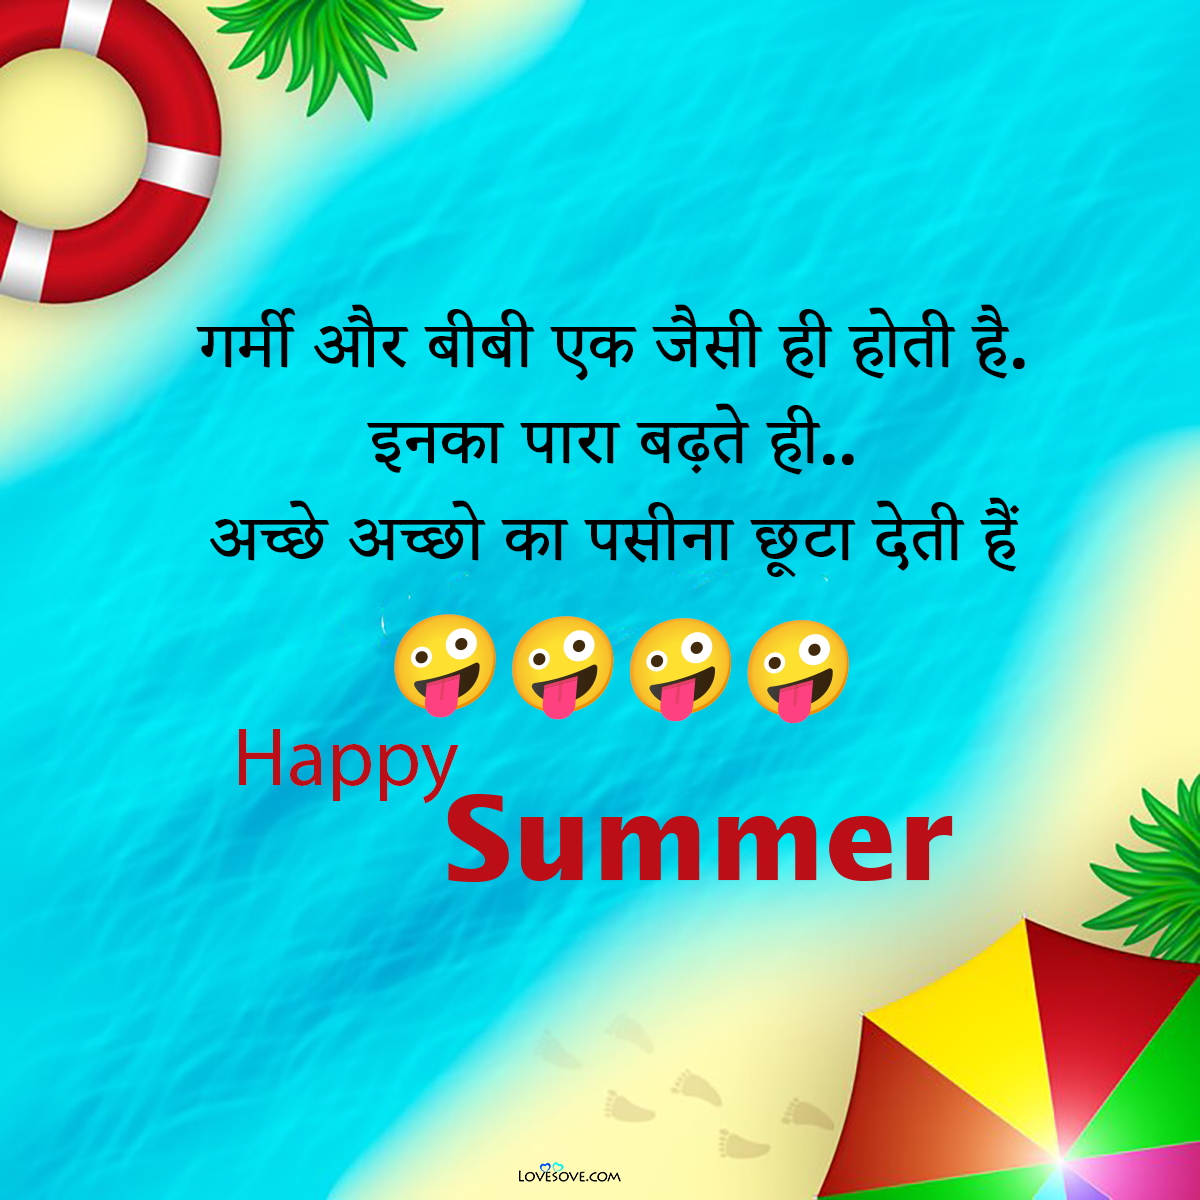 summer quotes in hindi, best garmi jokes